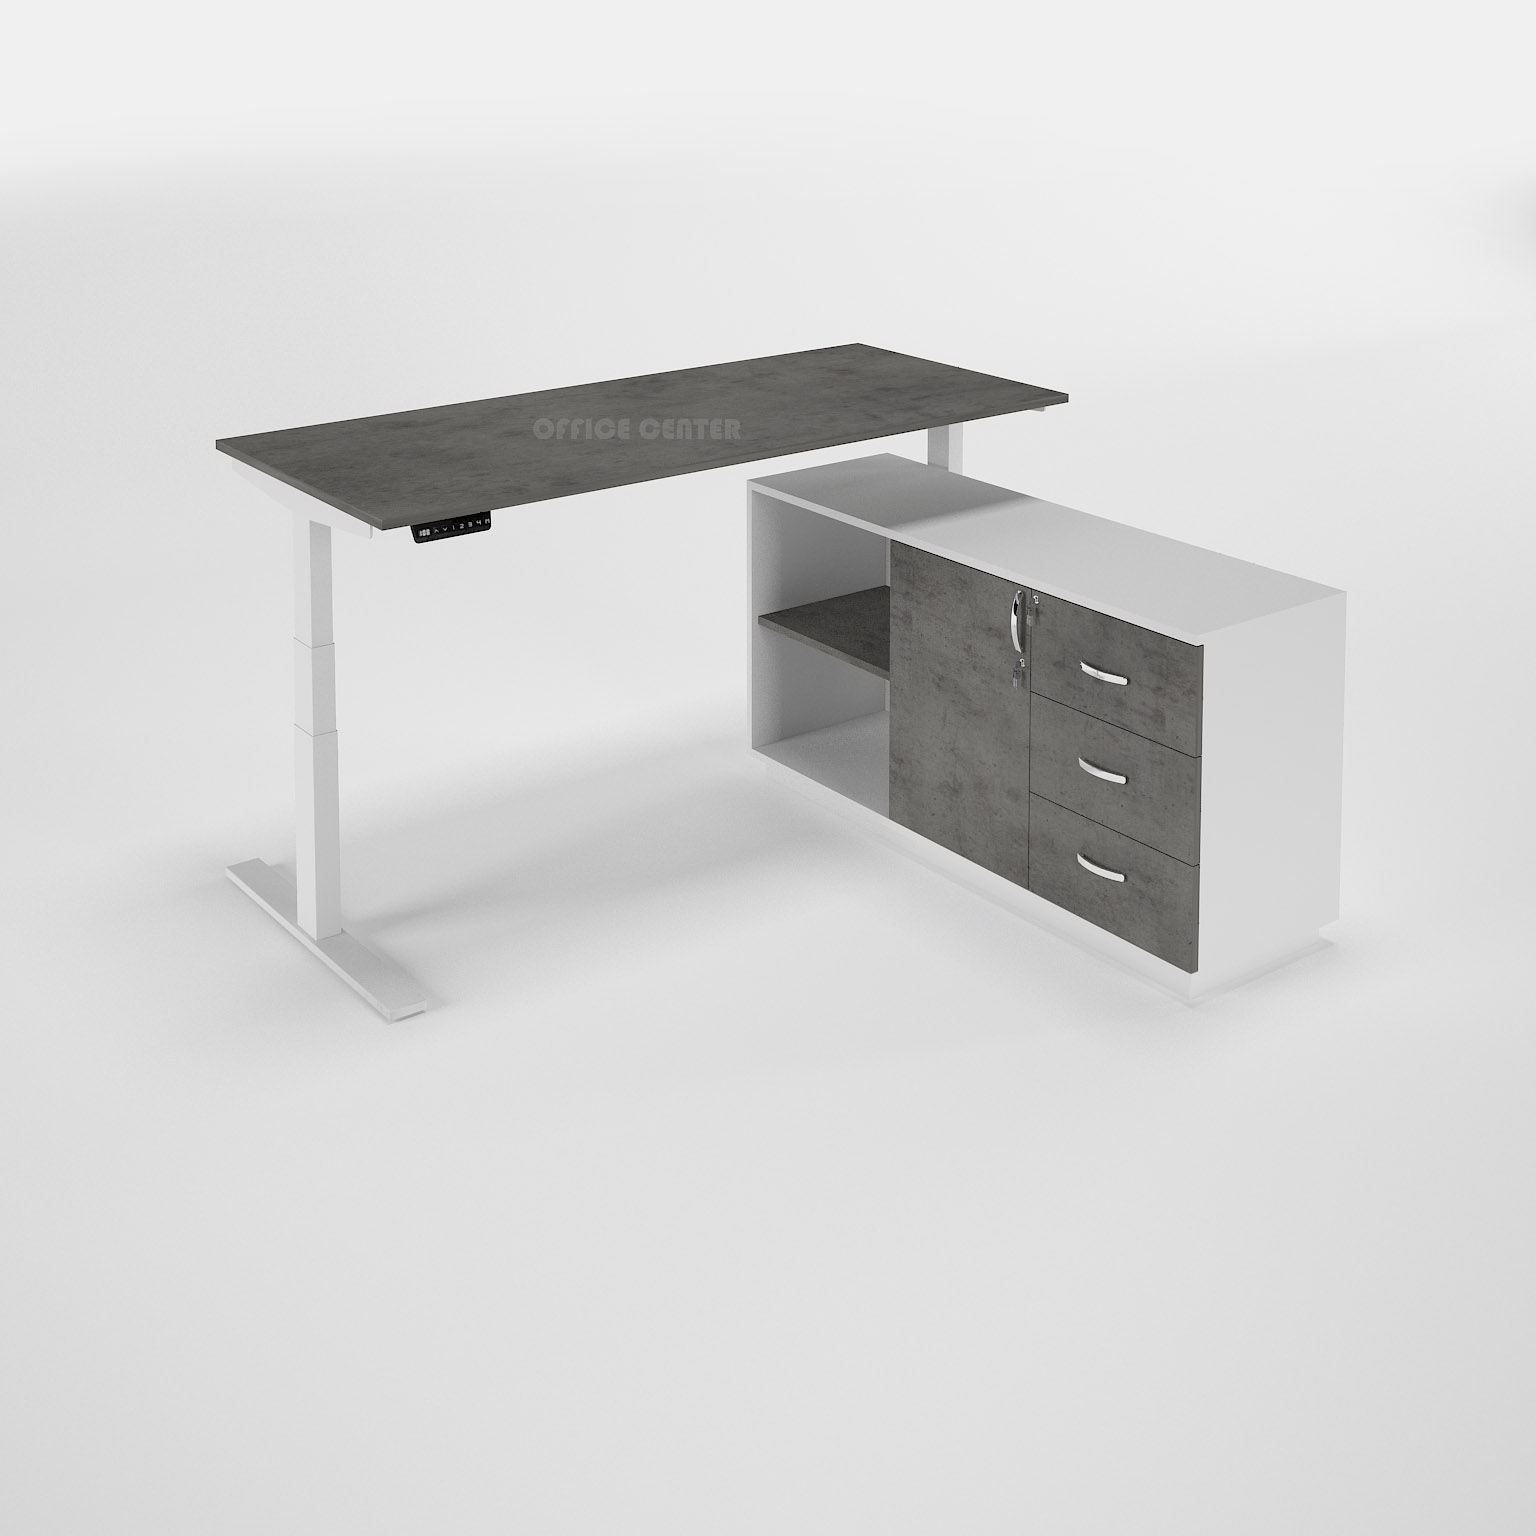 Alex S3 Height adjustable desk